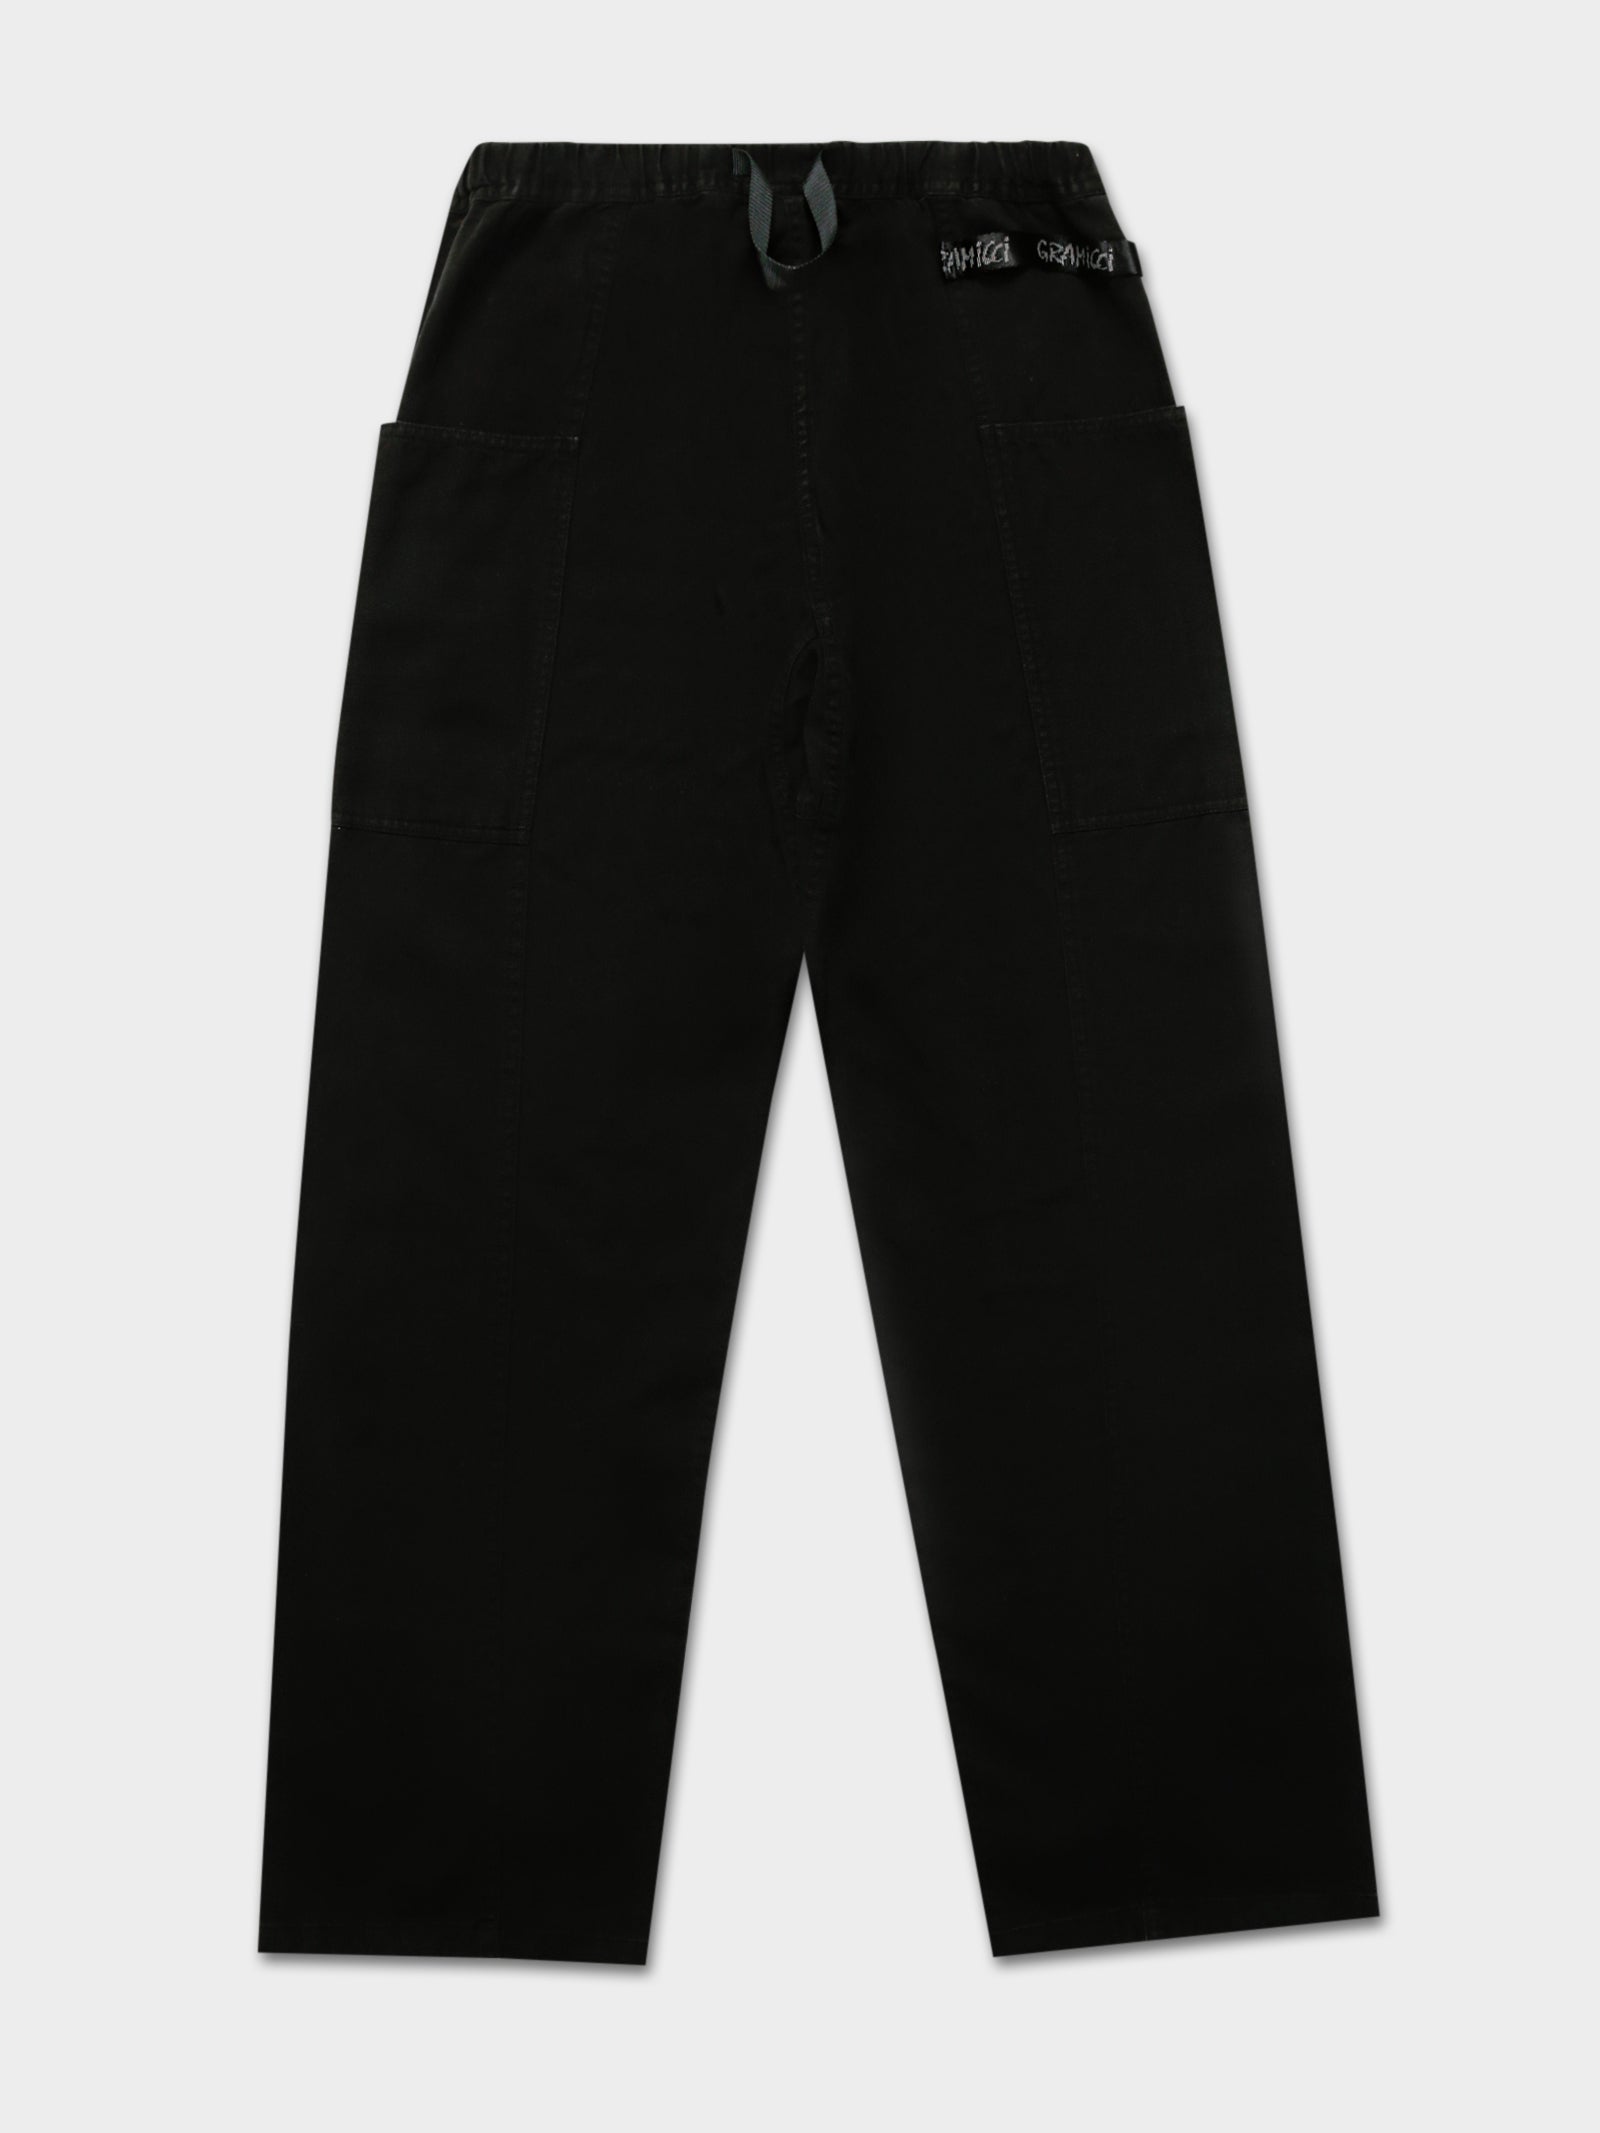 Gadget Pants in Black